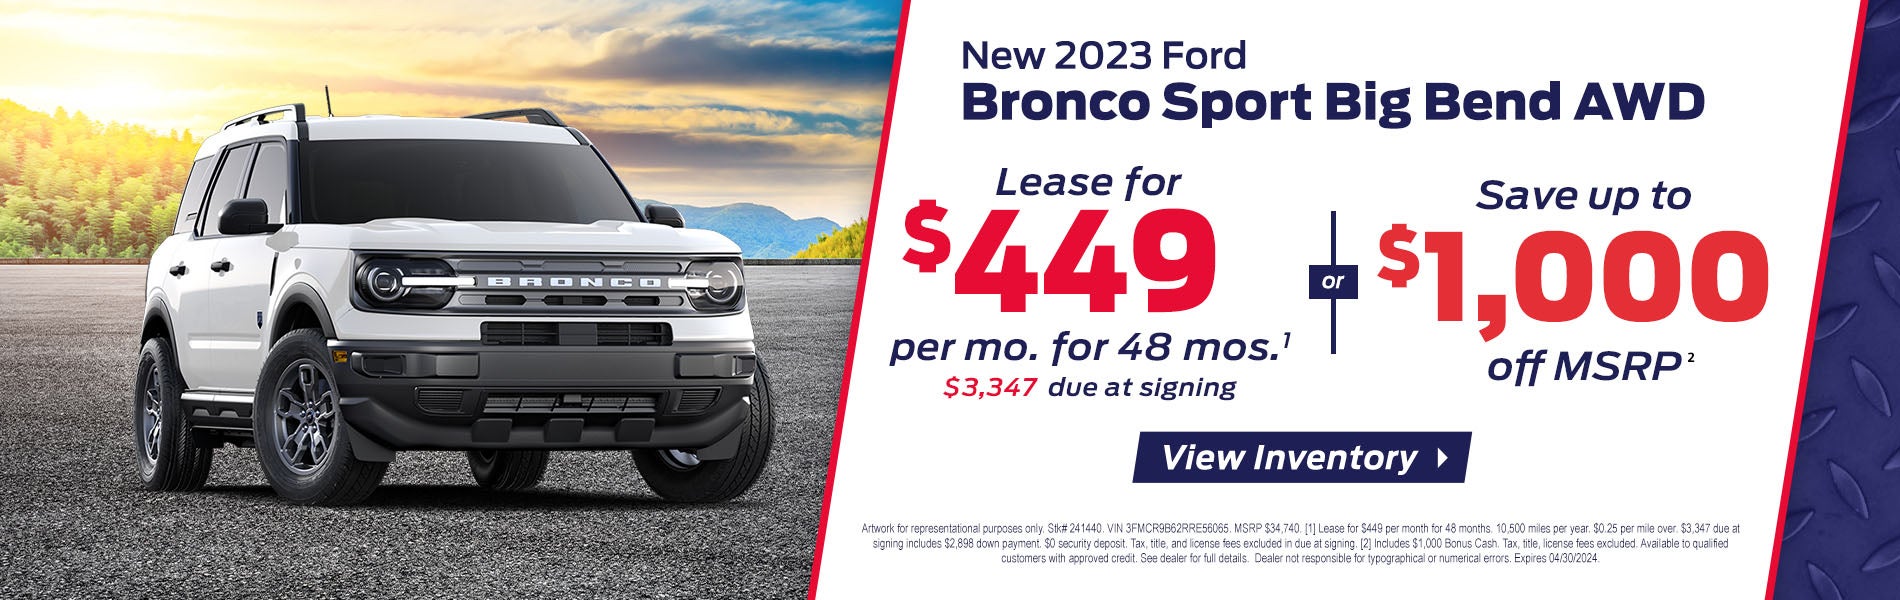 2023 bronco sport lease deal